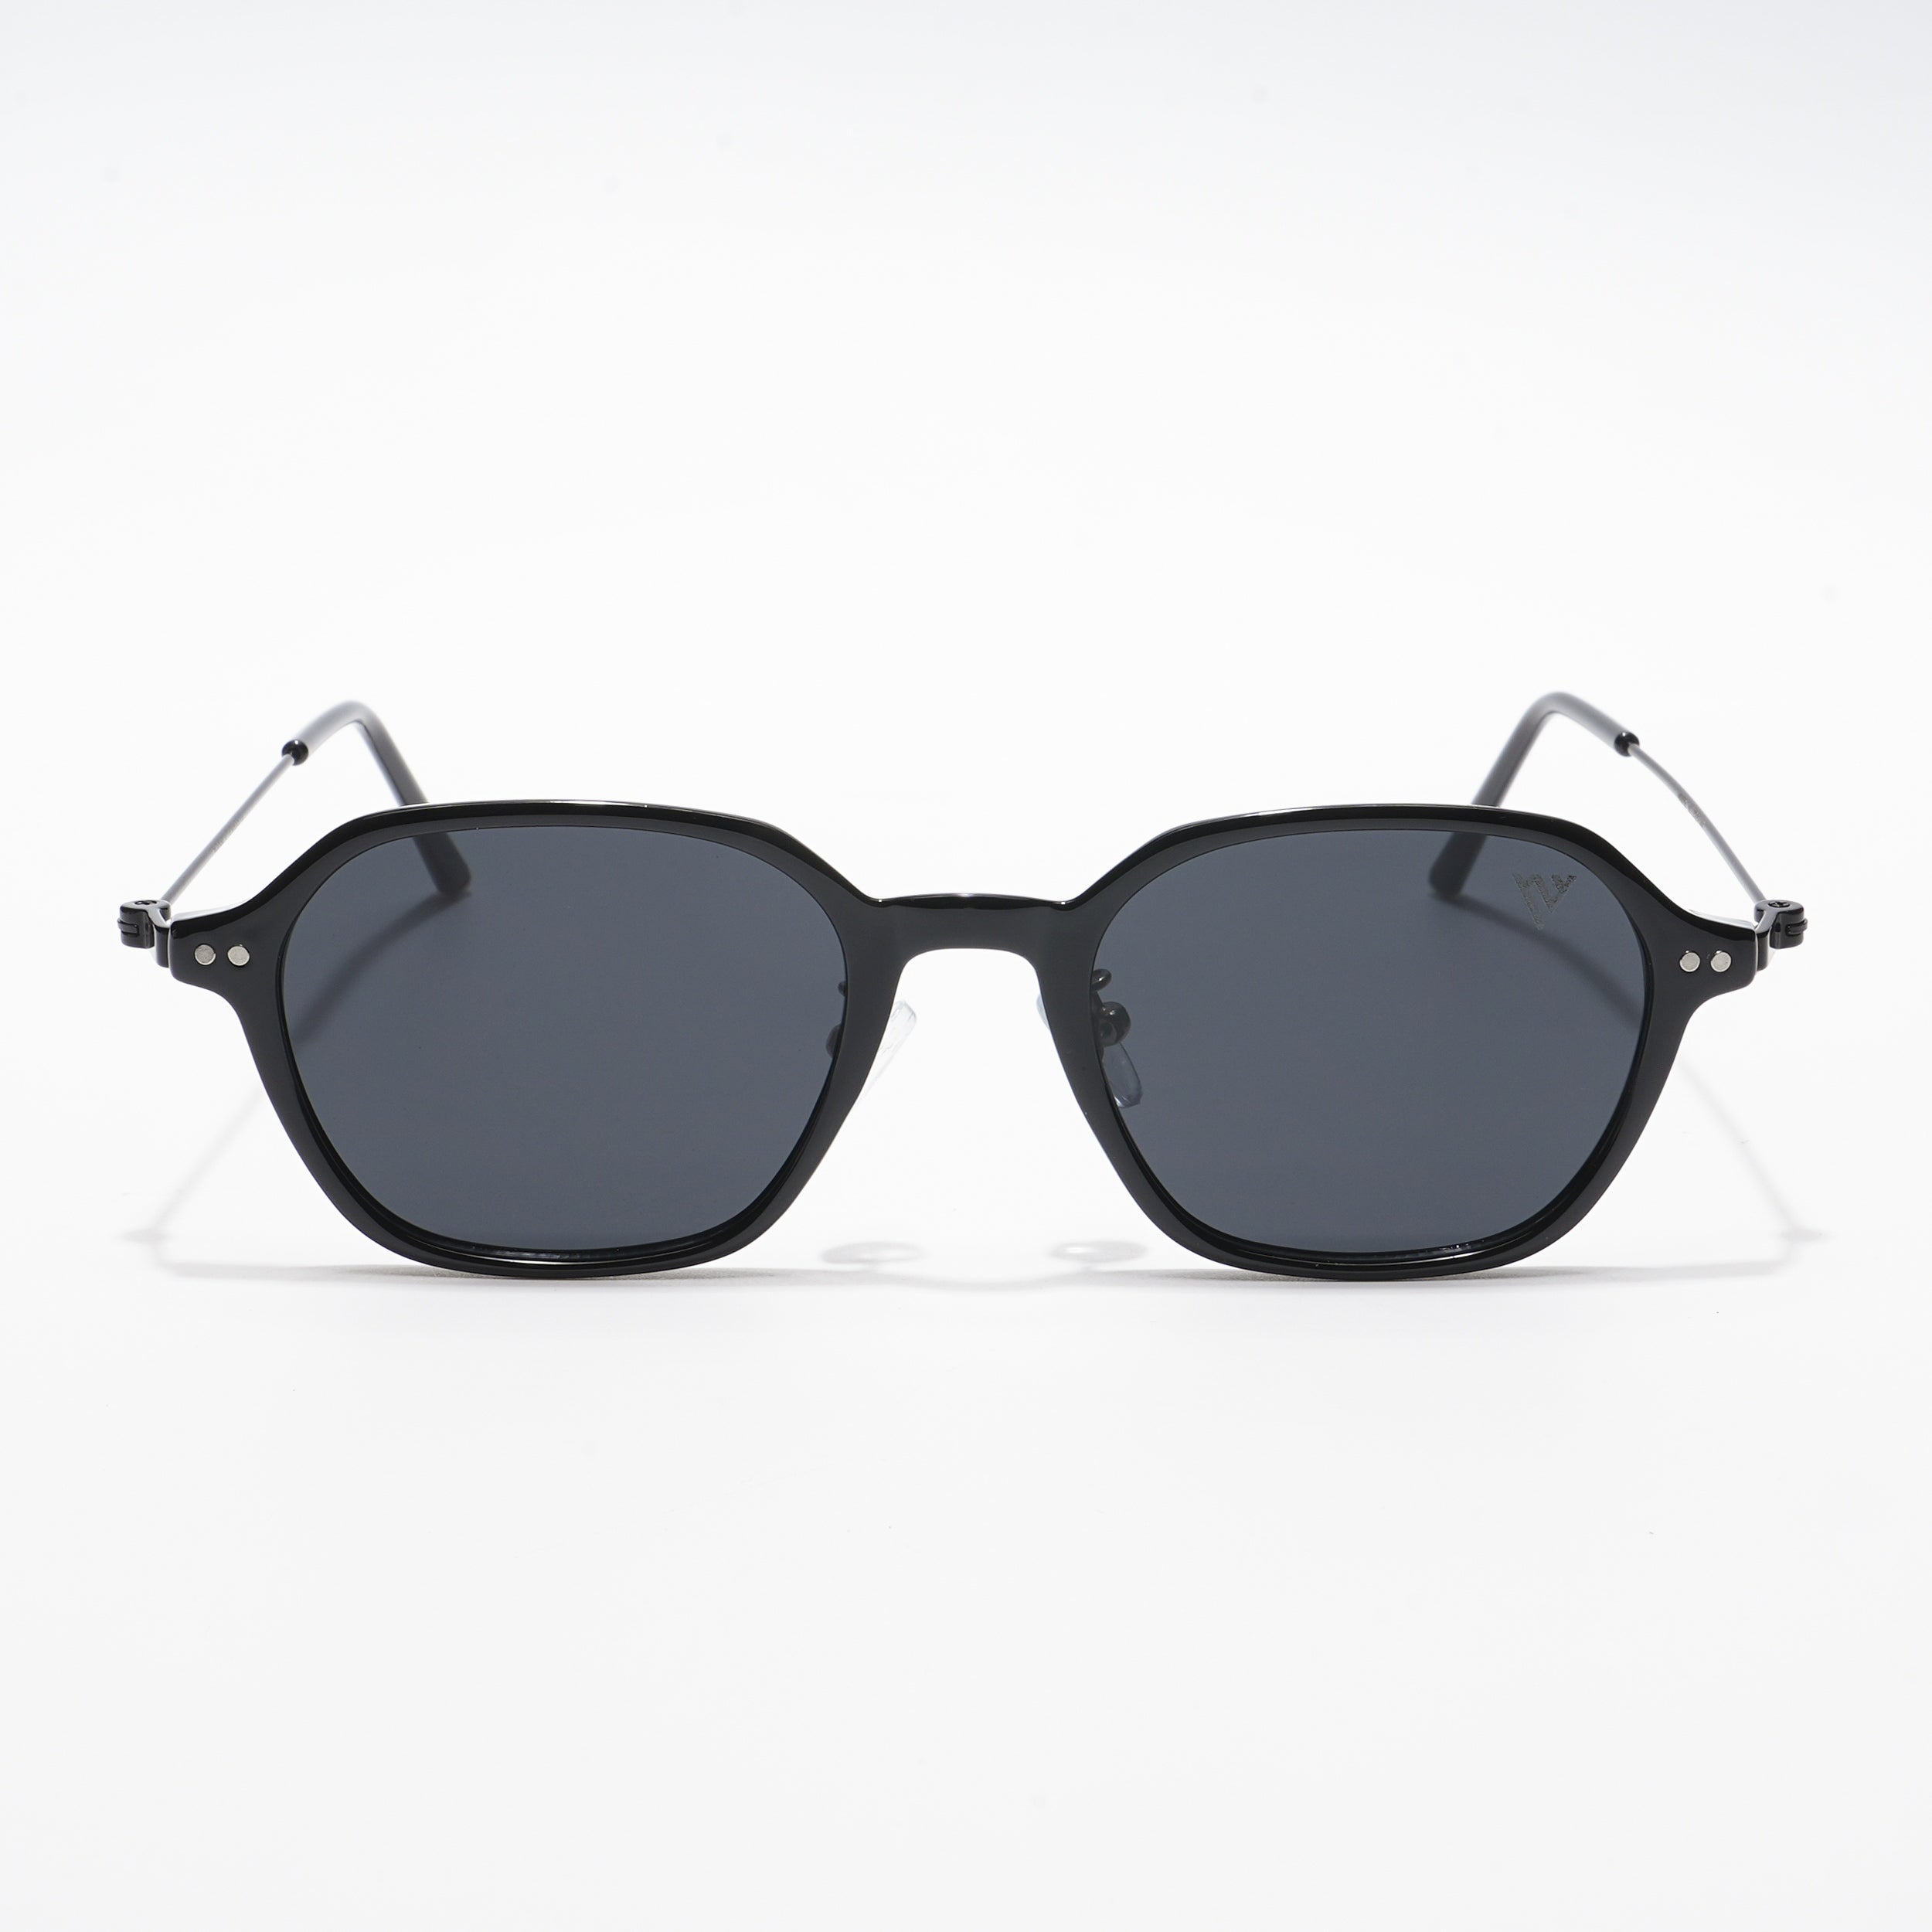 Voyage Black Oval Sunglasses - MG3888